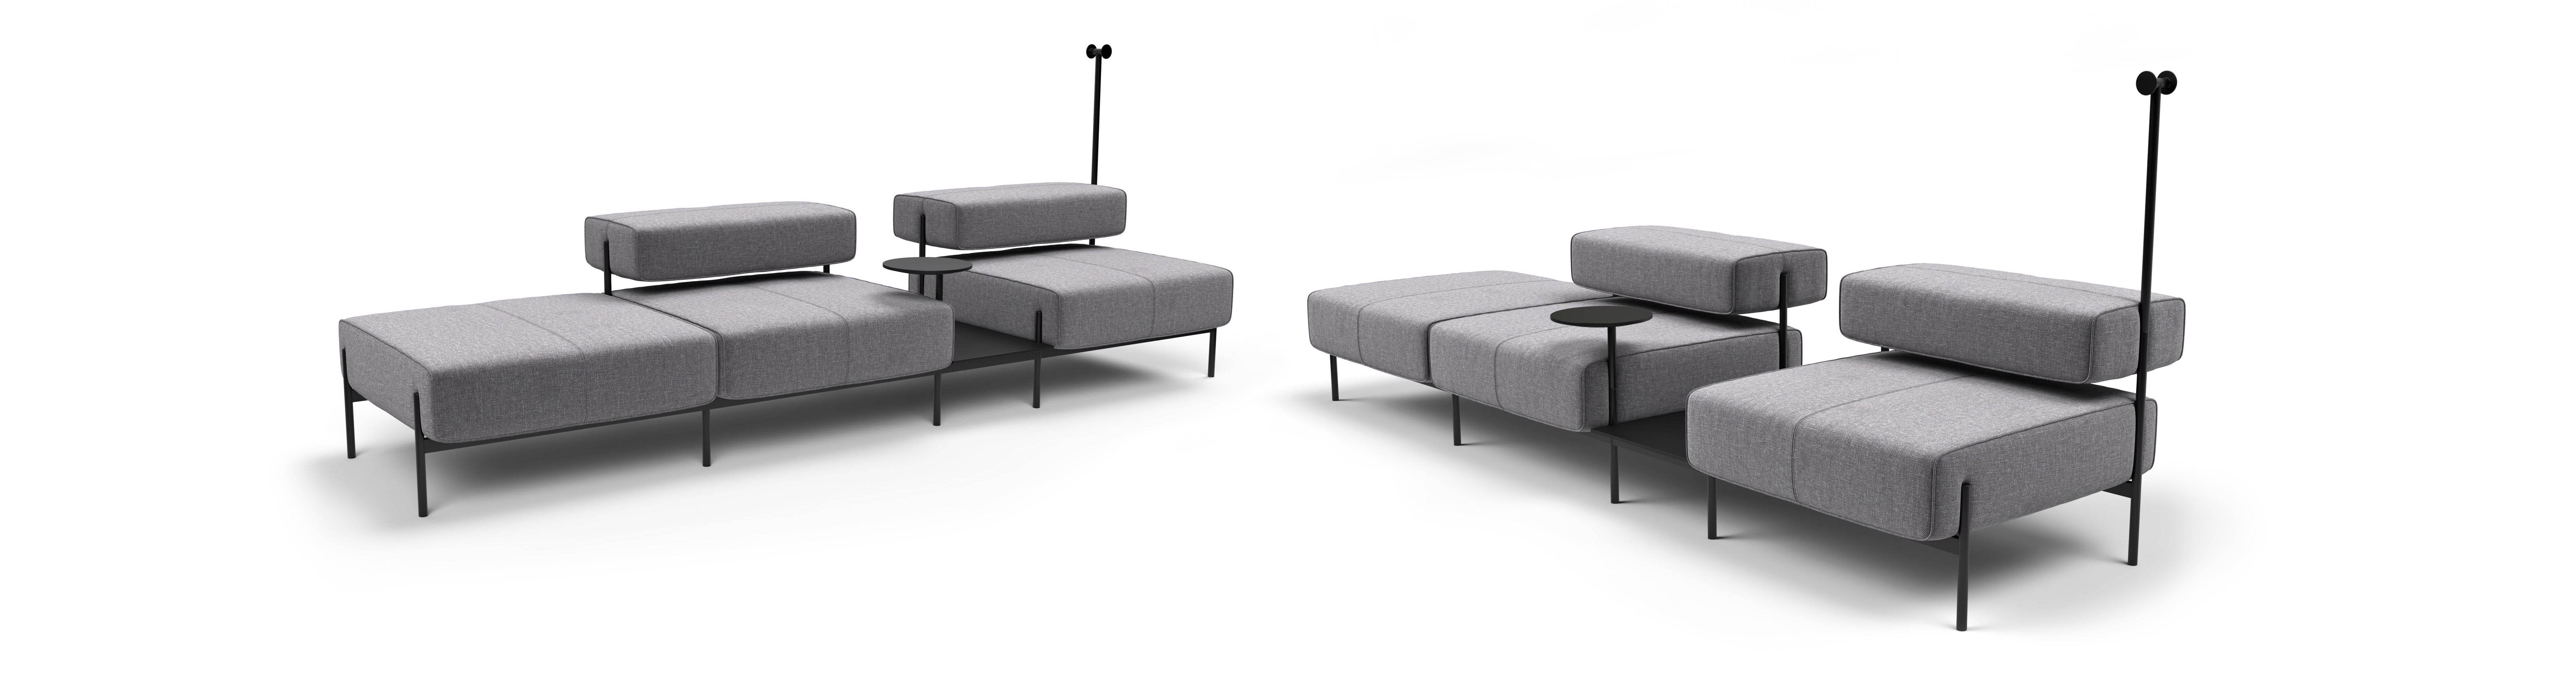 Offecct Lucy Modular Sofa Lounge Chair